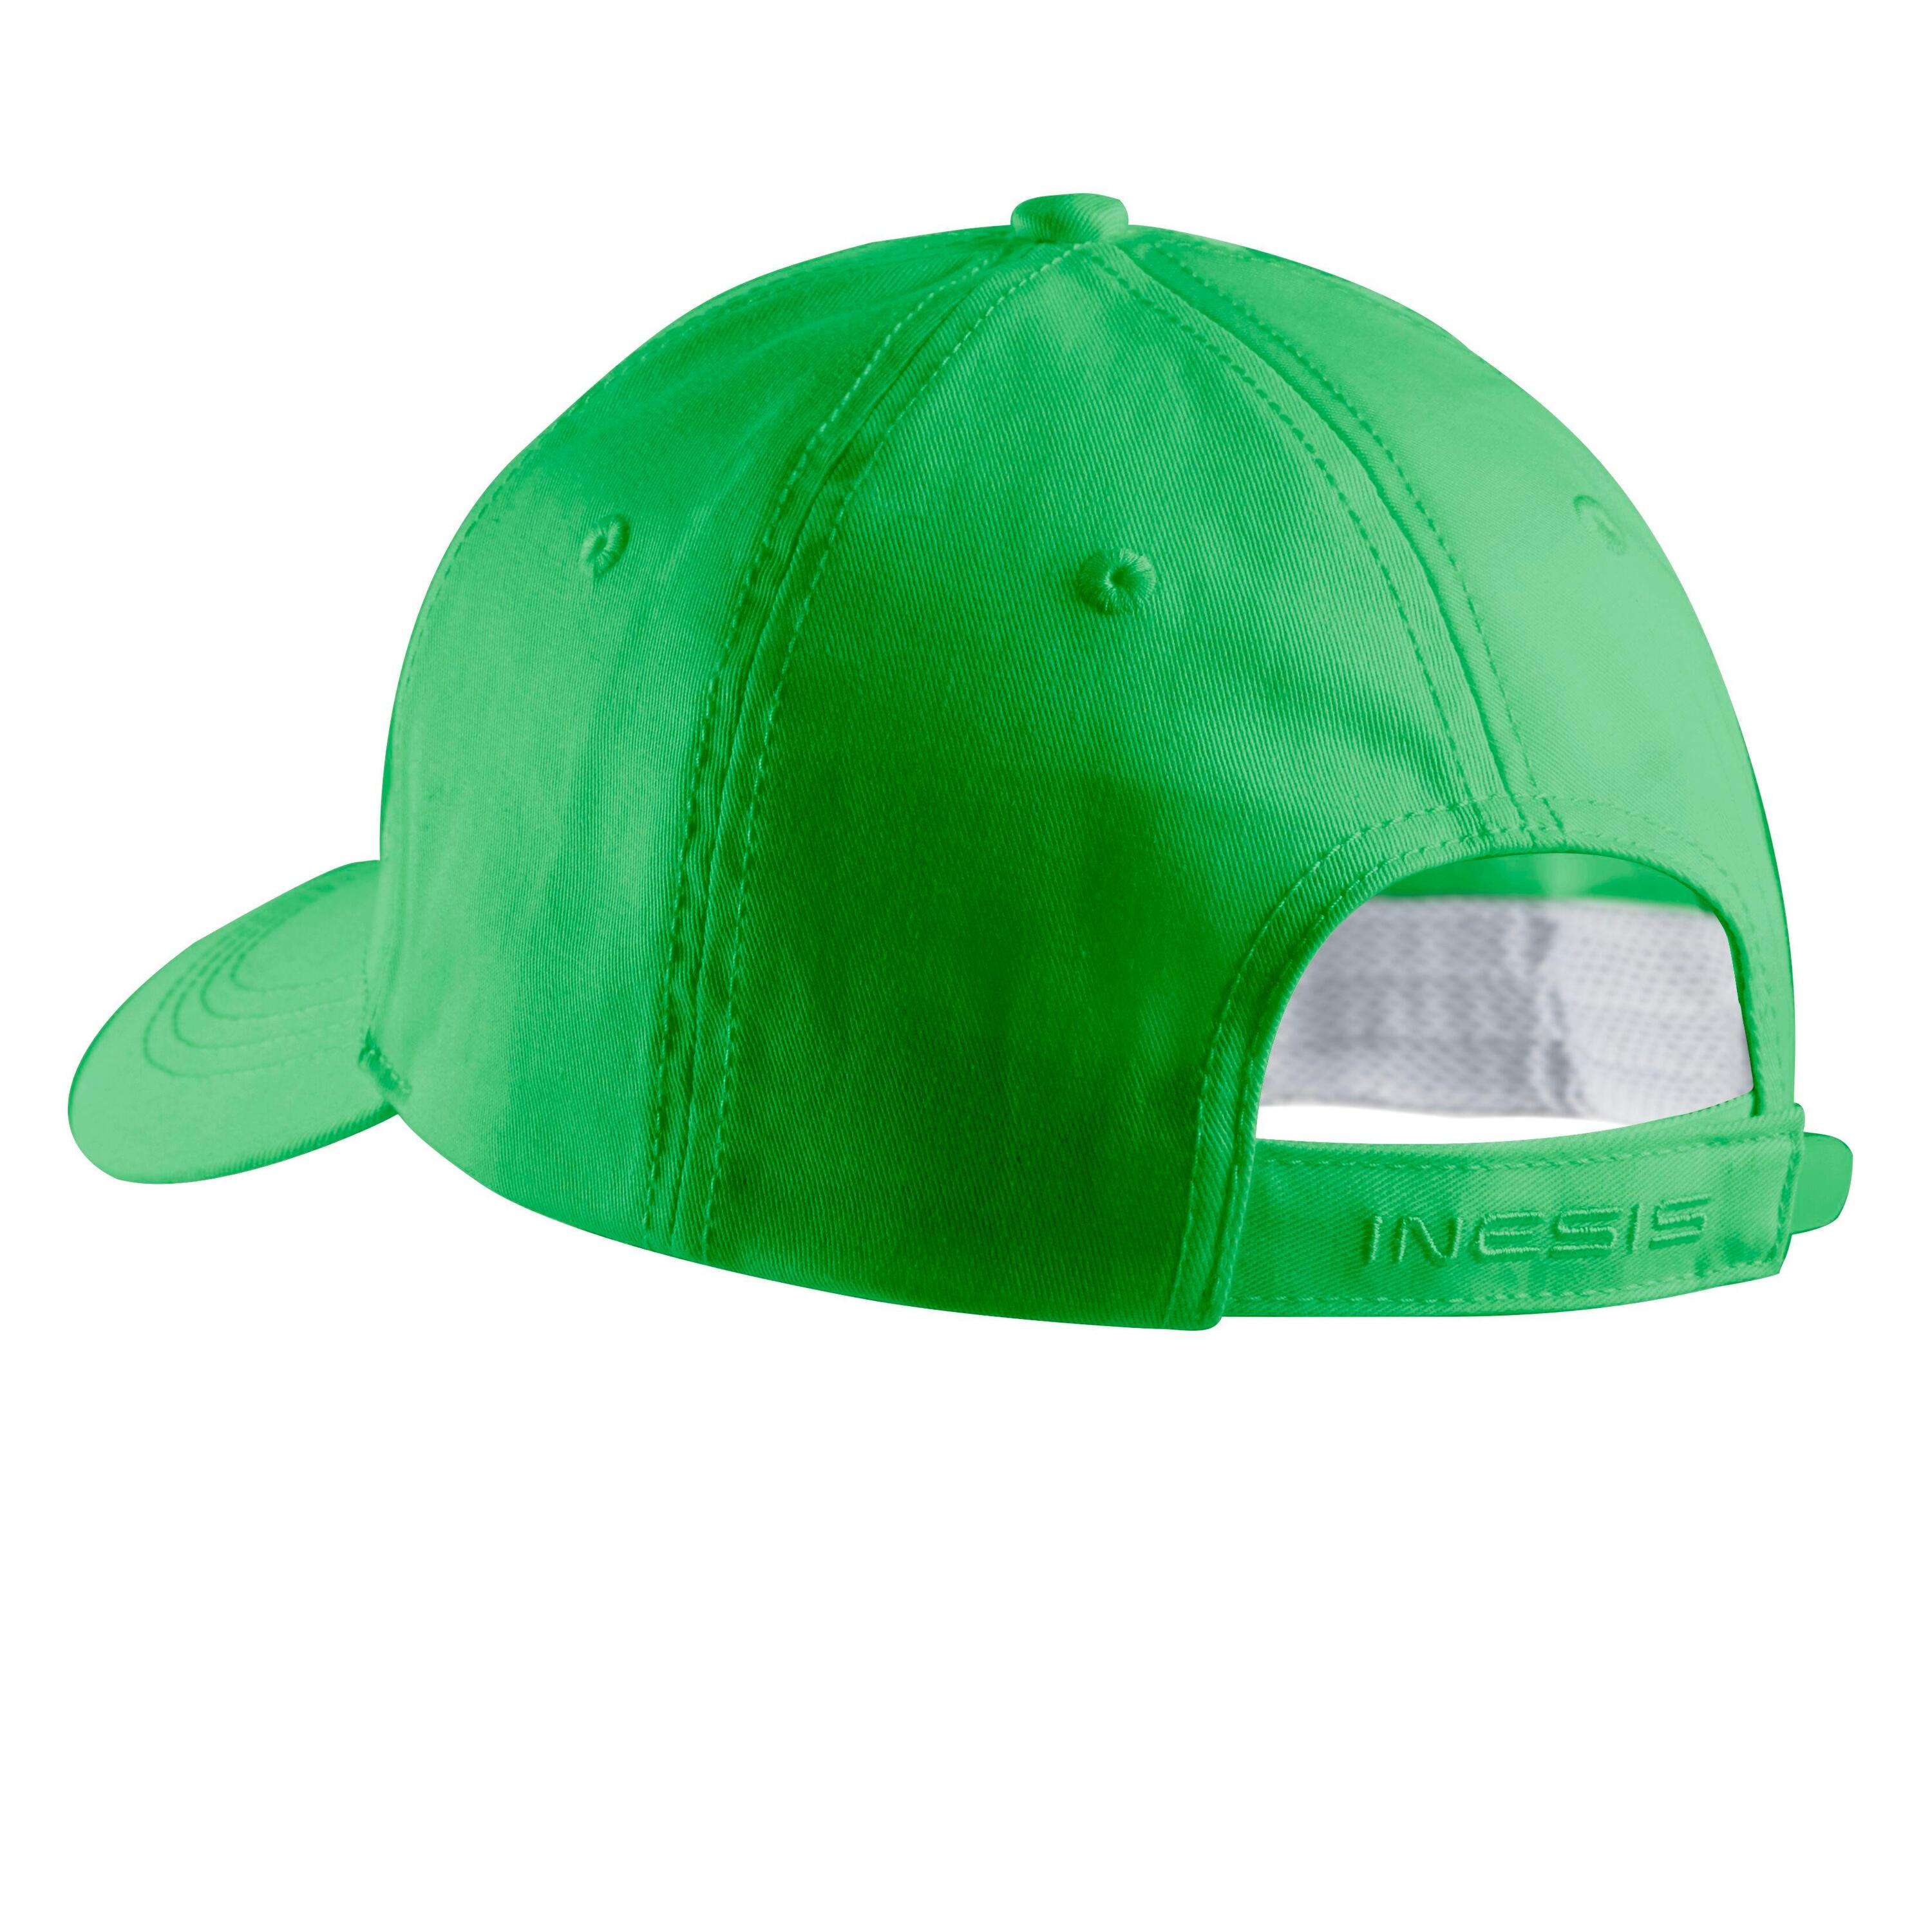 Adult's golf cap - MW 500 dark green 3/3